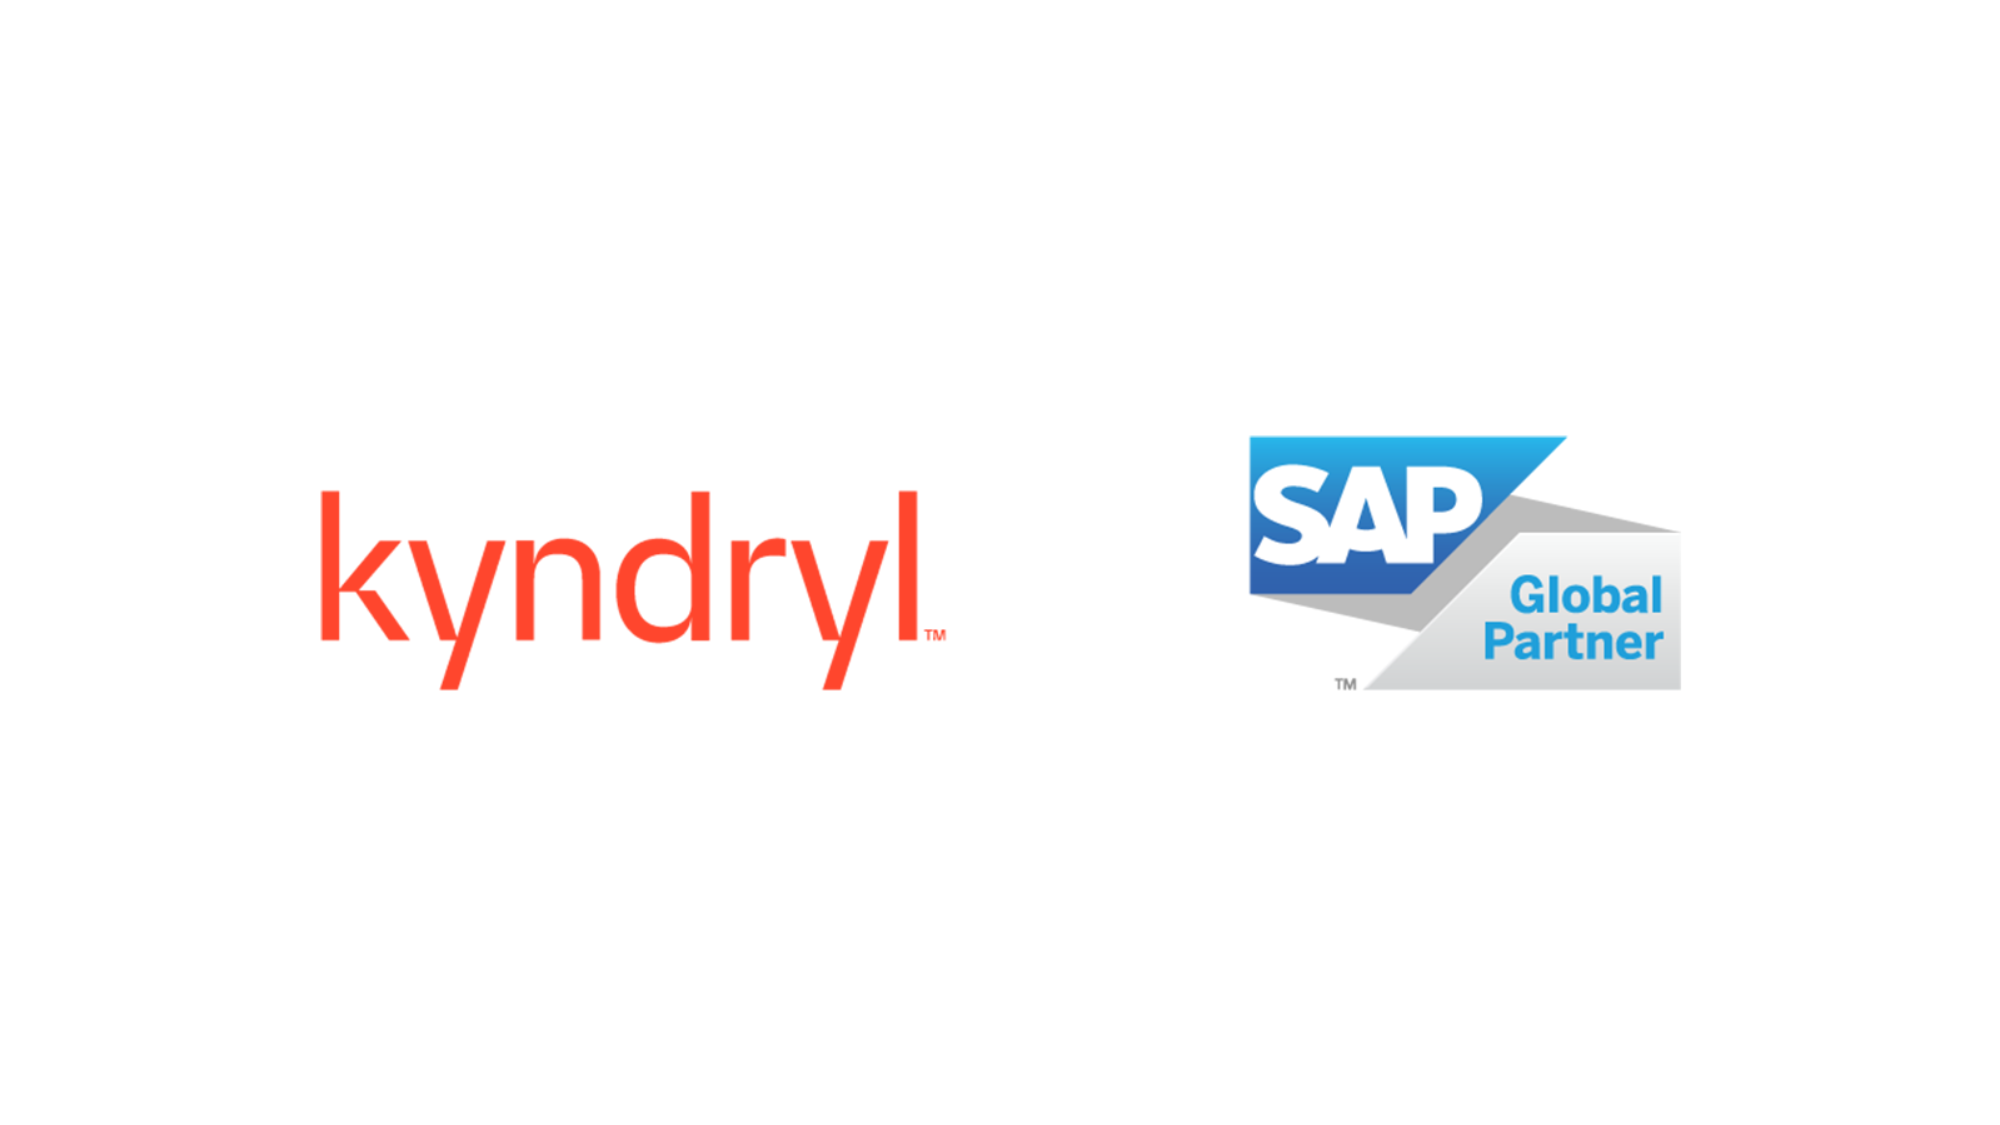 A logo lockup of Kyndryl and SAP on white background